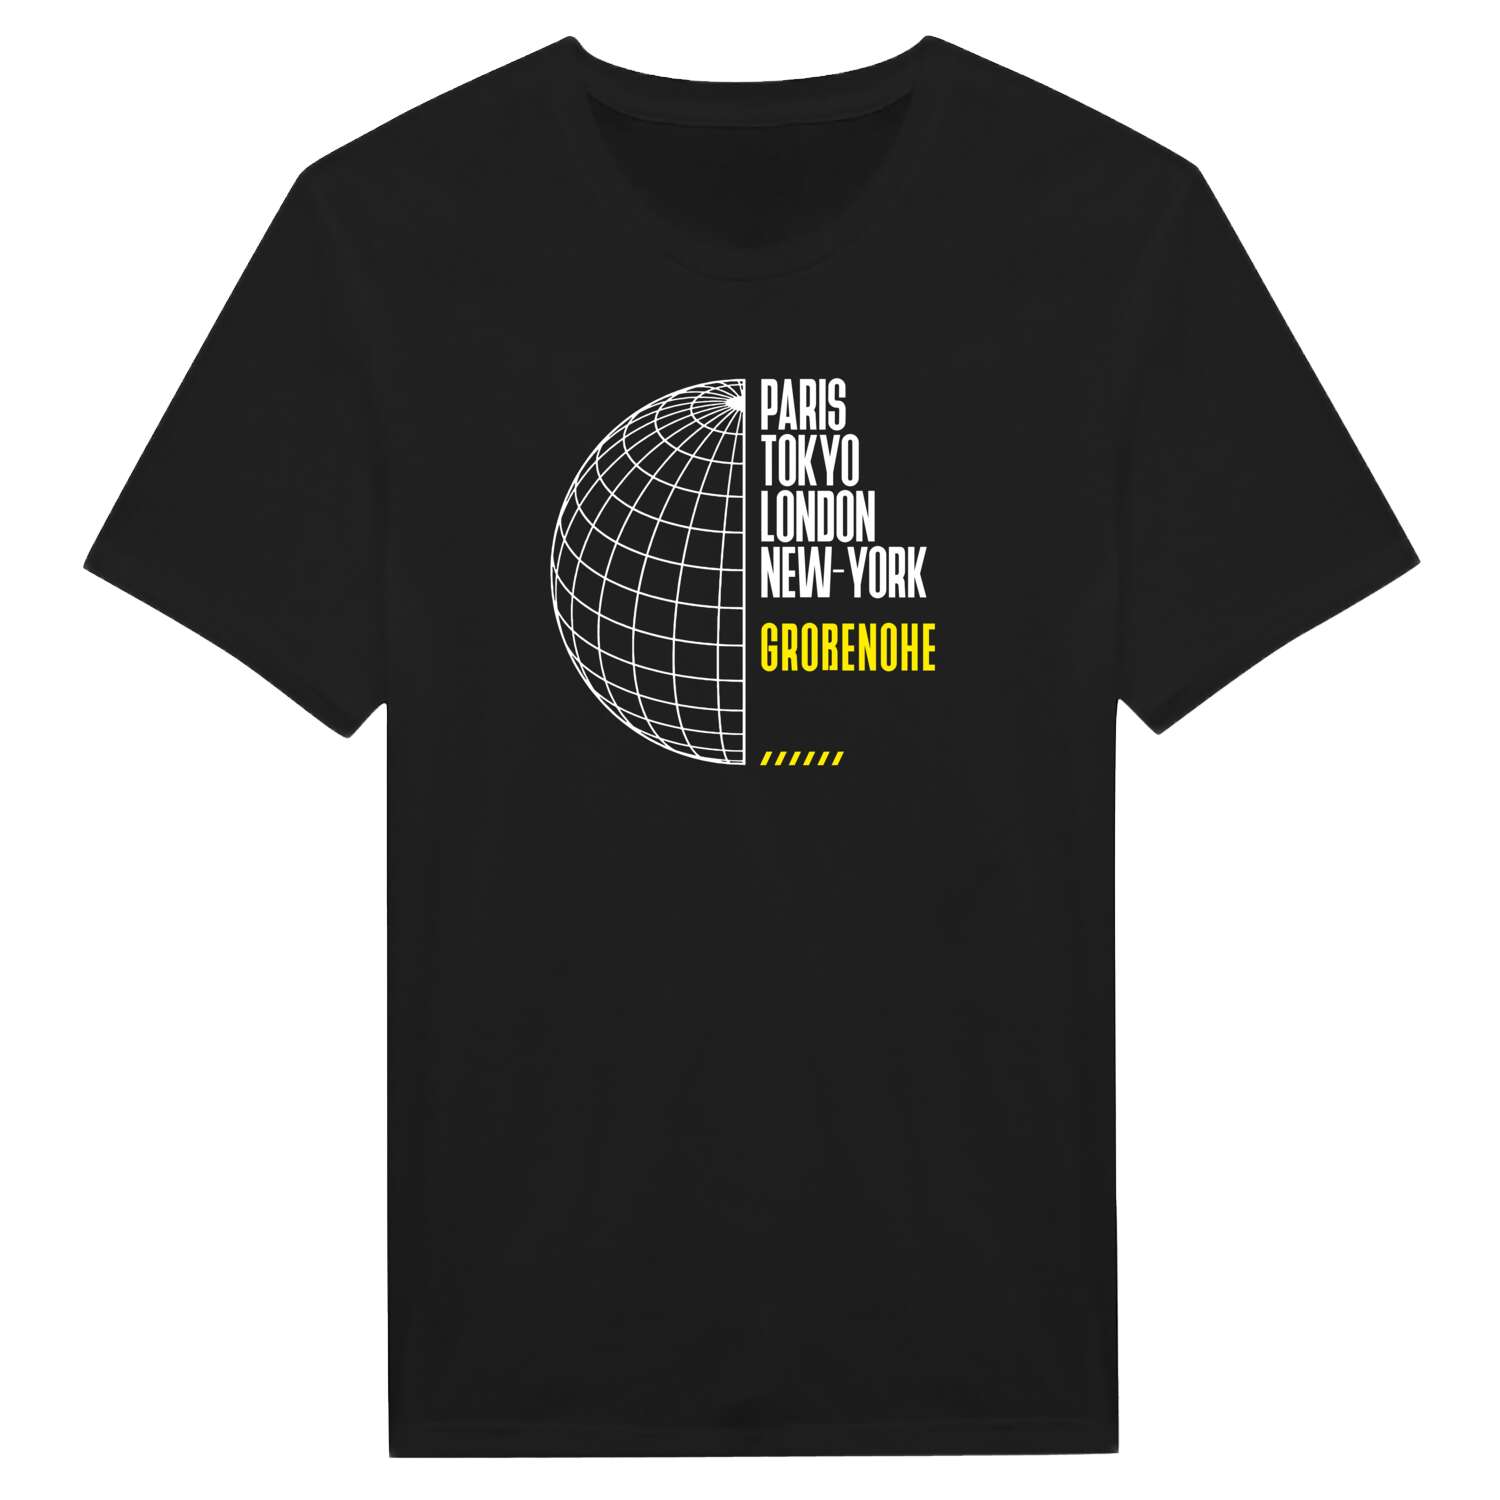 Großenohe T-Shirt »Paris Tokyo London«